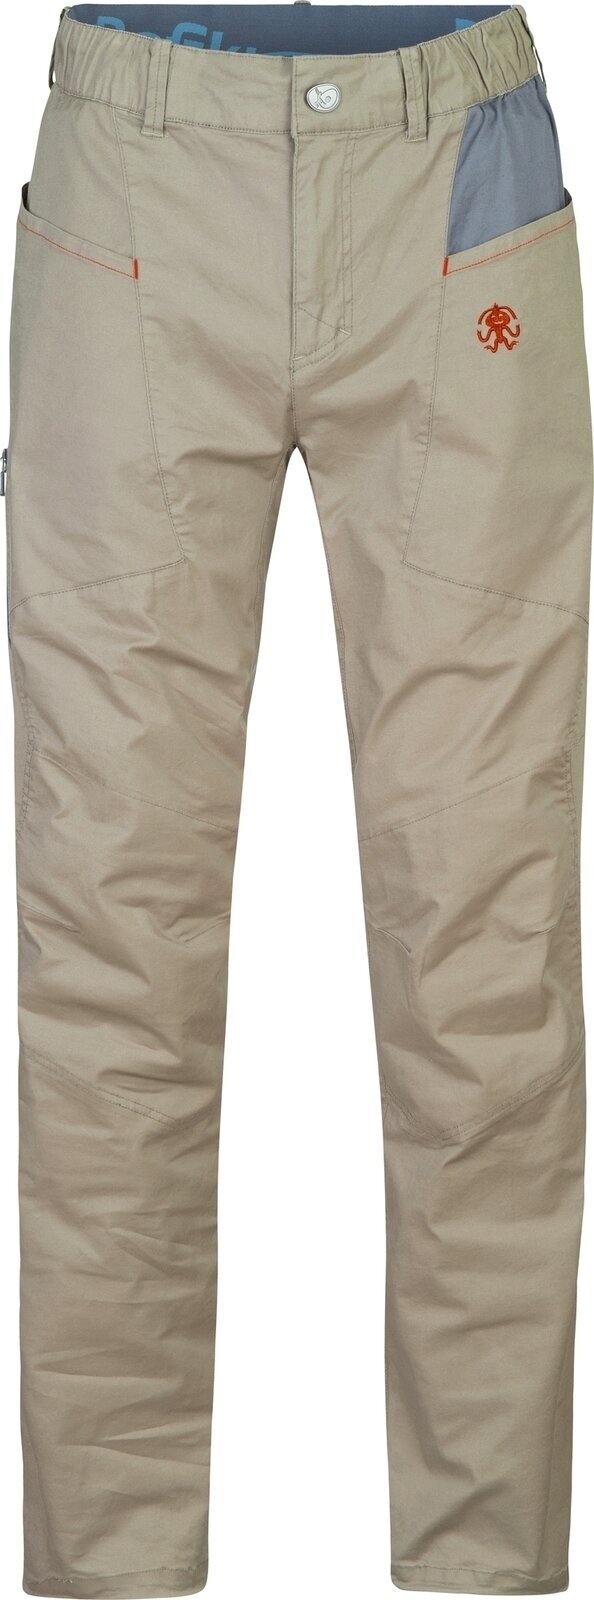 Outdoor Pants Rafiki Crag Man Pants Brindle/Ink S Outdoor Pants